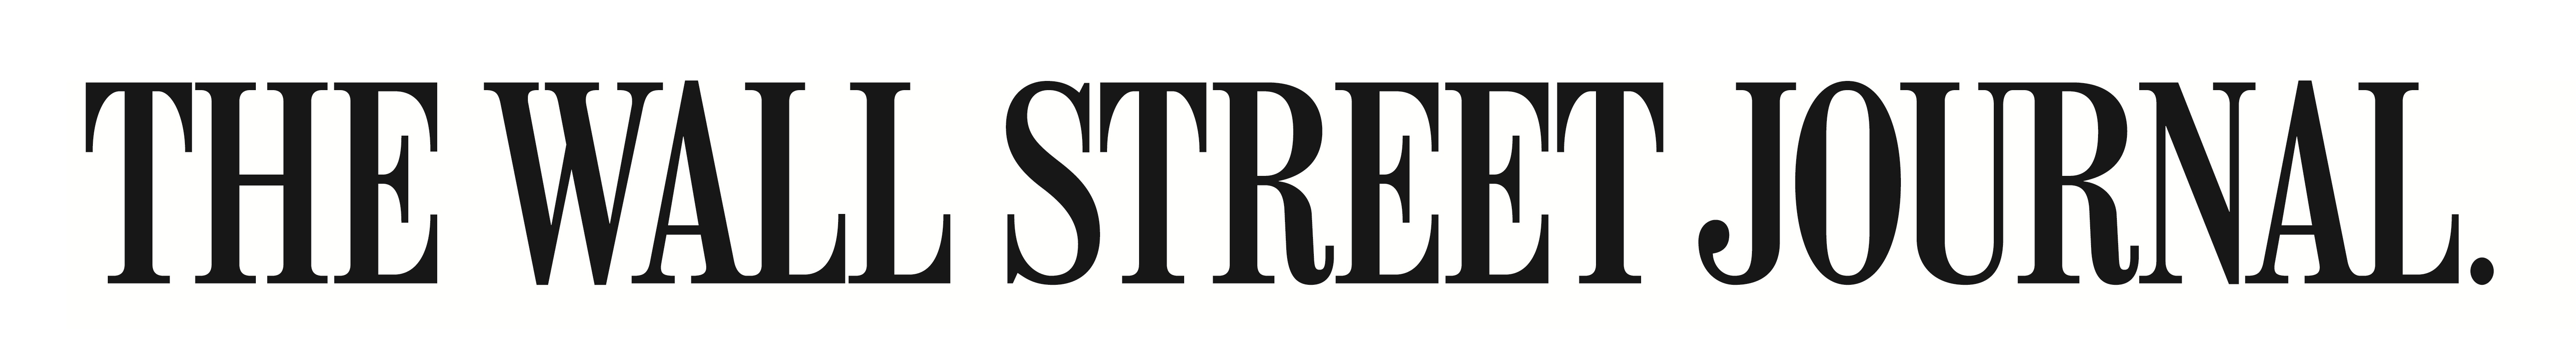 the-wall-street-journal-logo.jpg